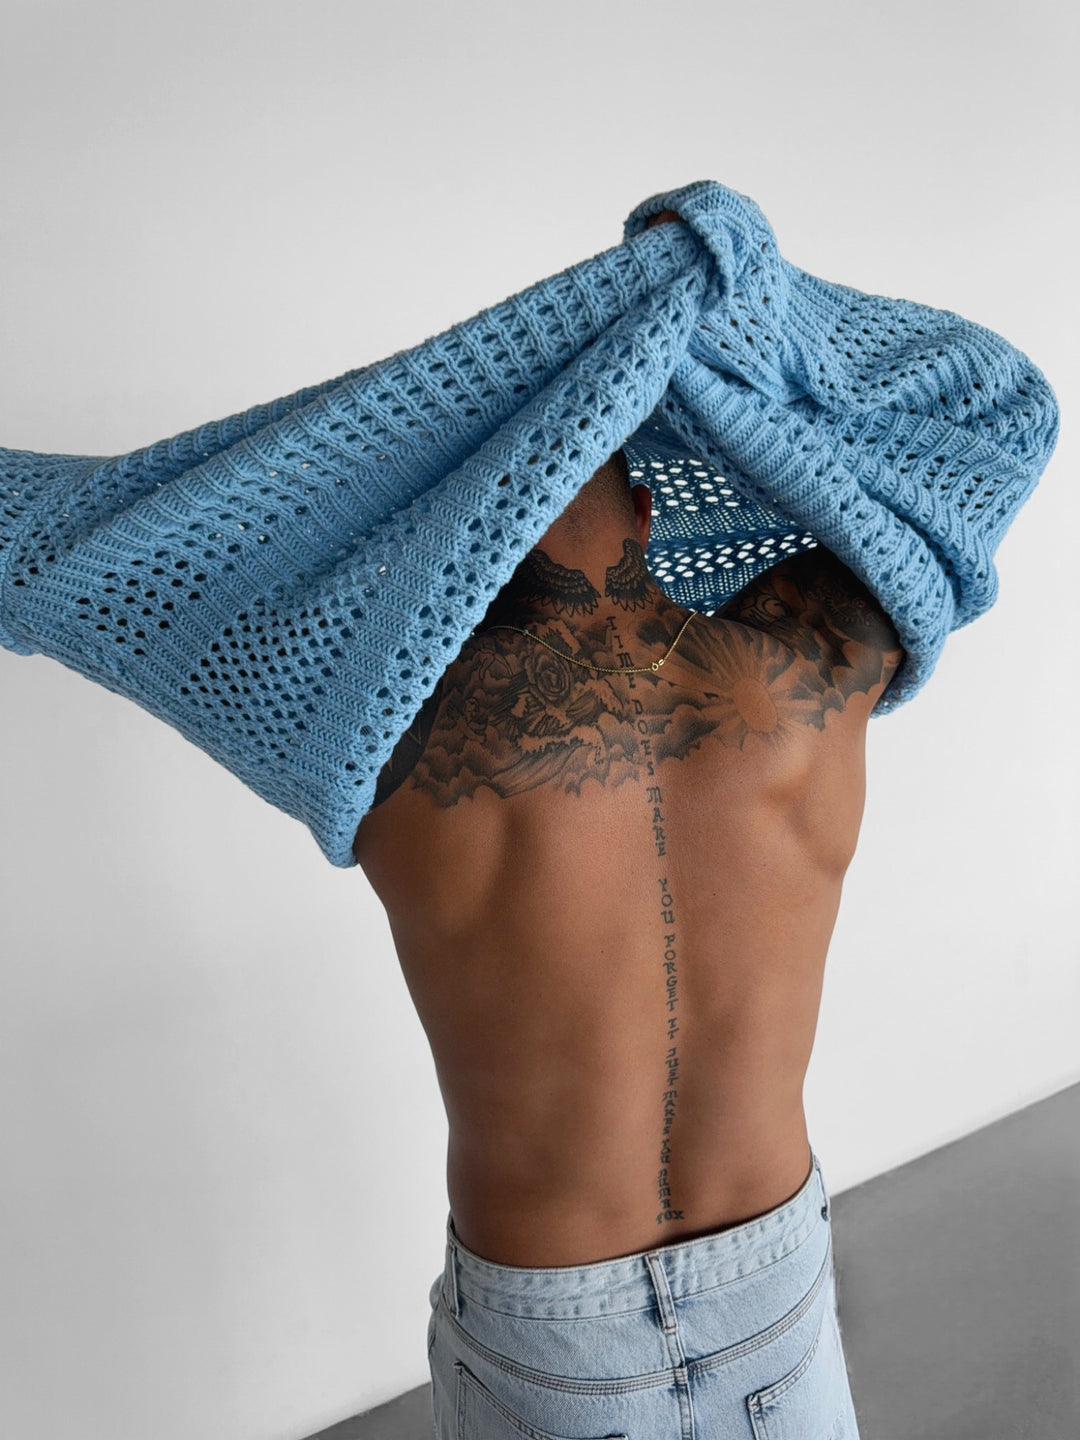 Oversize Holey Knit Sweater - Baby blue